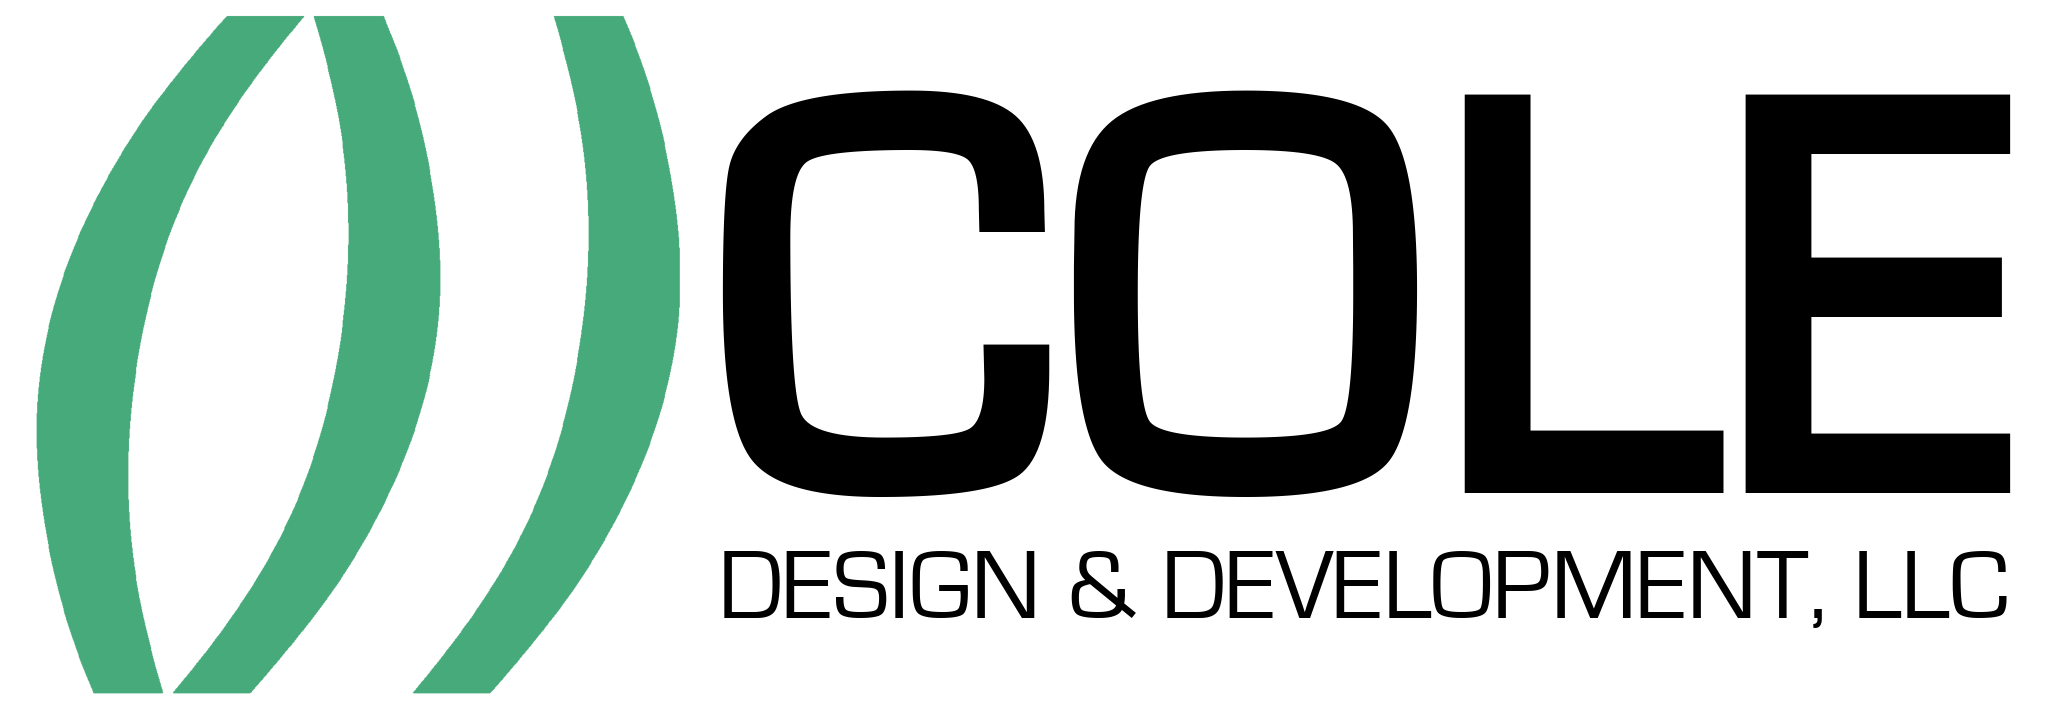 Cole Design and Development, LLC